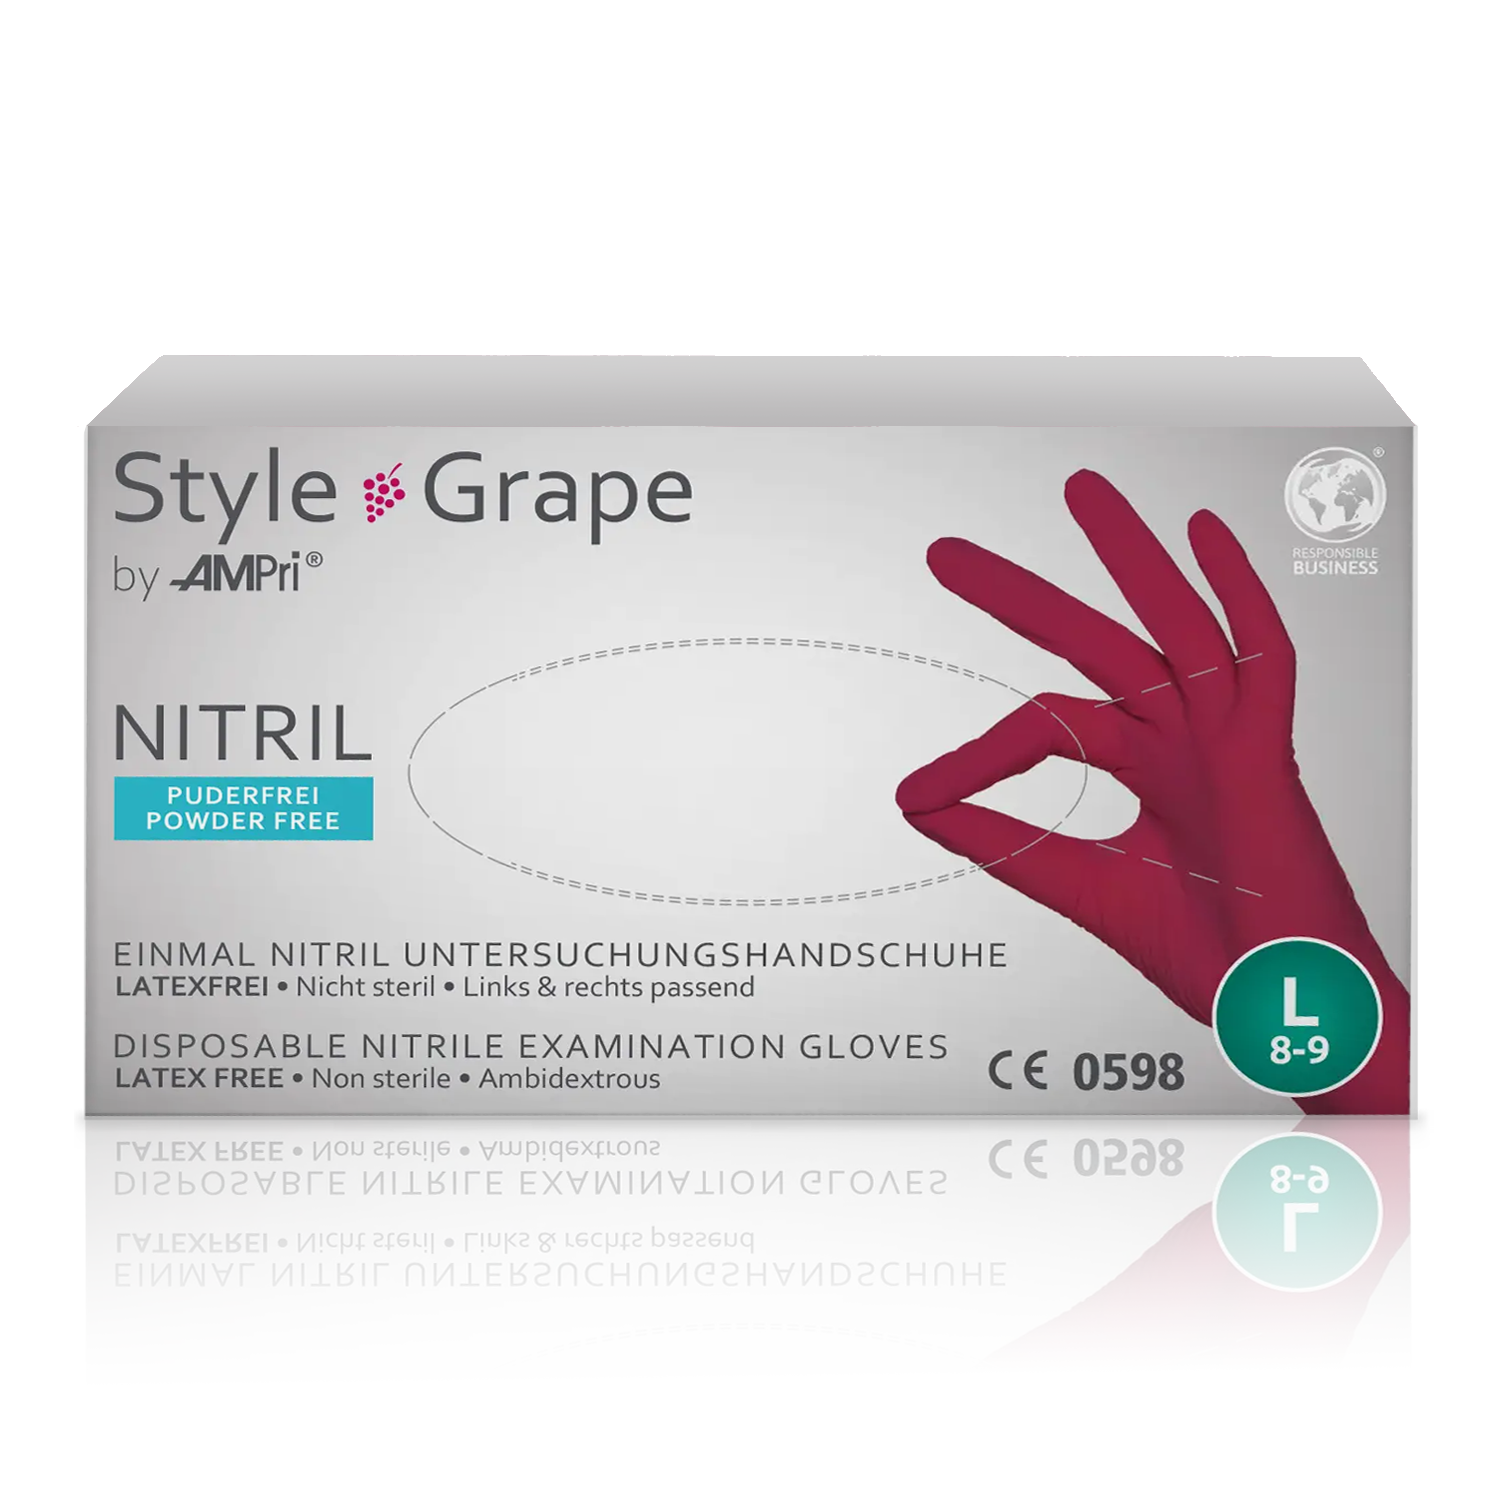 Nitril Style Grape bordeaux Einmalhandschuhe latexfrei